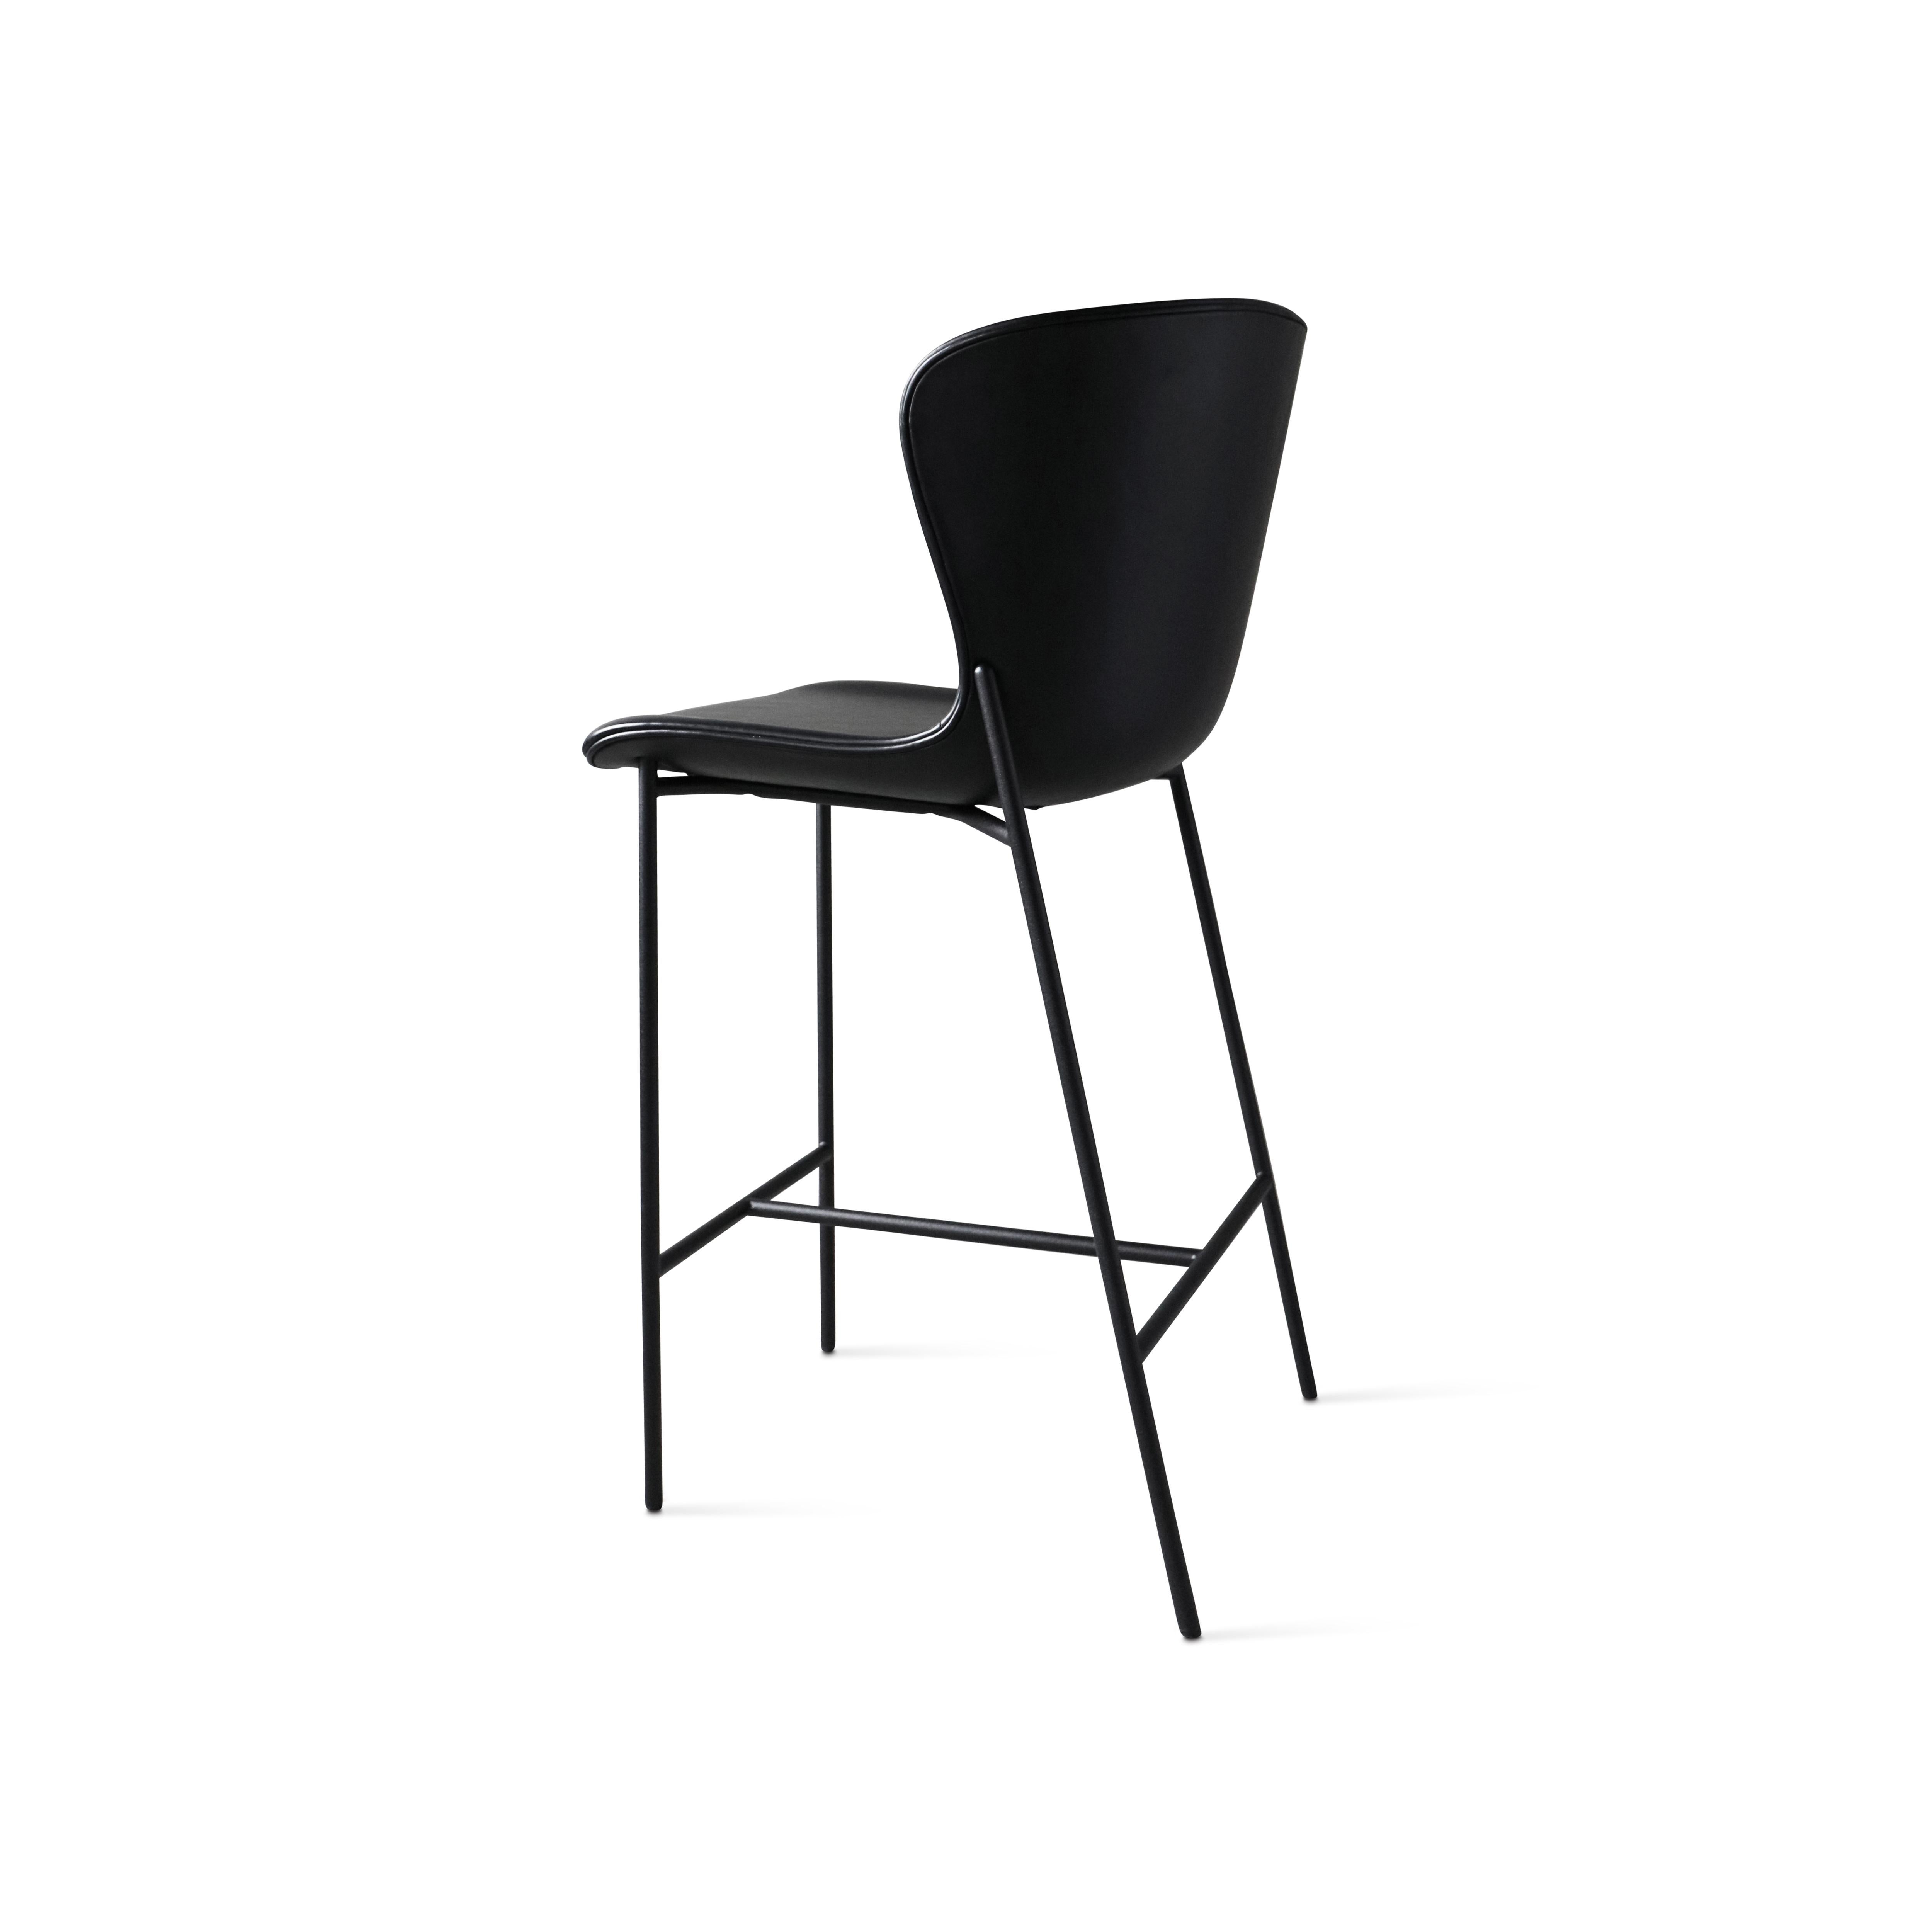 Pipe - chair 
Design: Friends & Founders
Model shown : Dakar Nevotex - Black Leather 0842 - Black Frame
Legs: Black steel

Dimensions H 110 / W 59 / D 55 cm (SH) 75 cm

Contemporary design studio Friends & Founders was founded in 2003 by Ida